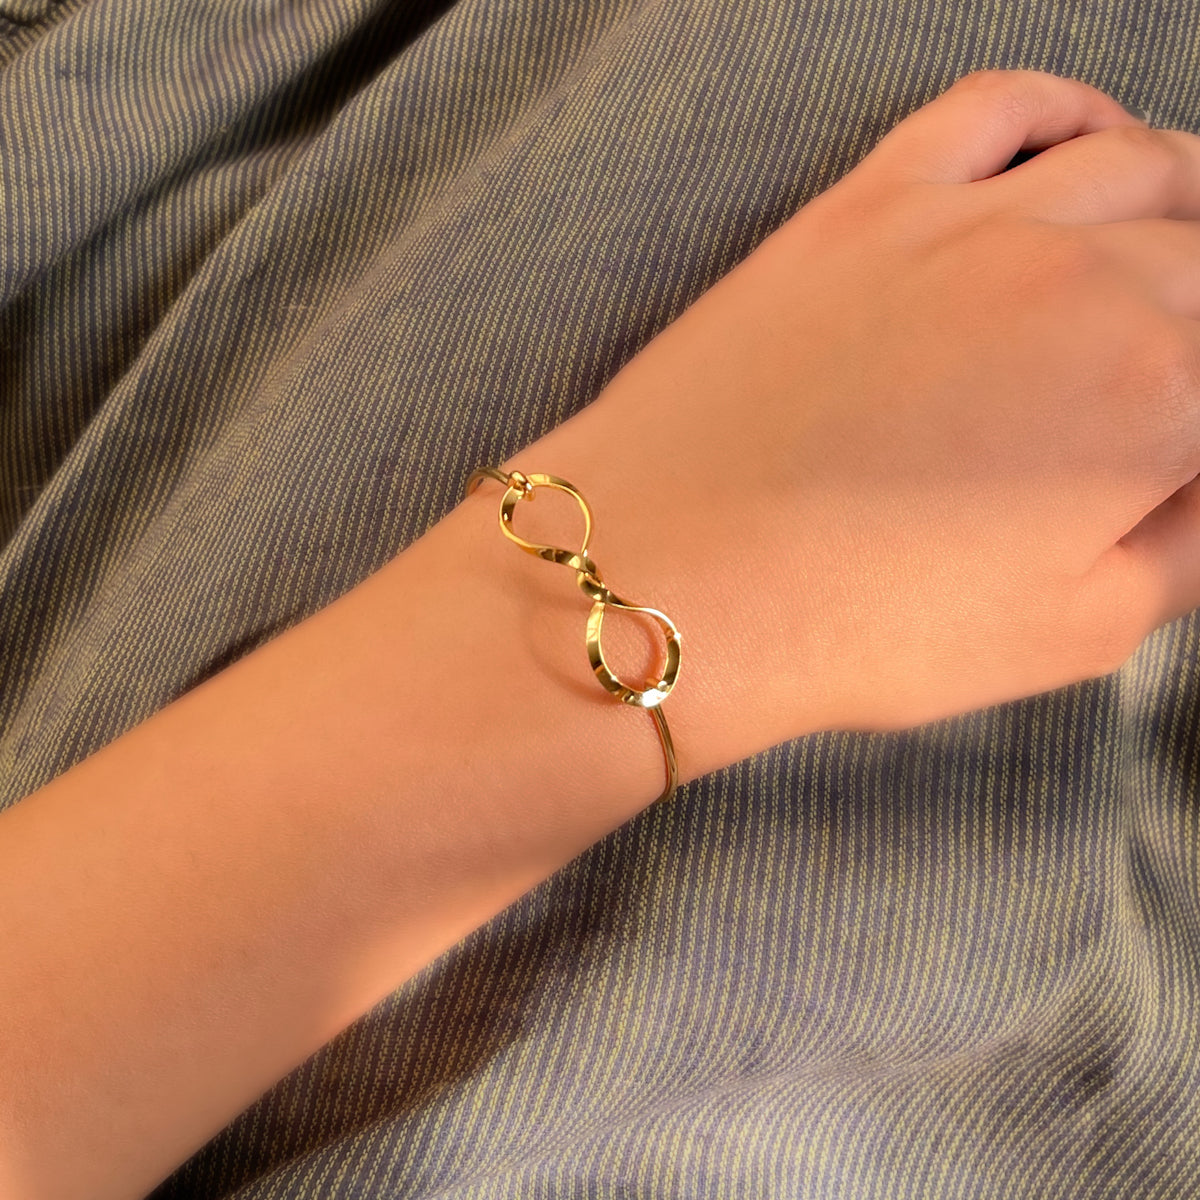 Bracelets for Small Wrists | Sarah's Real Life